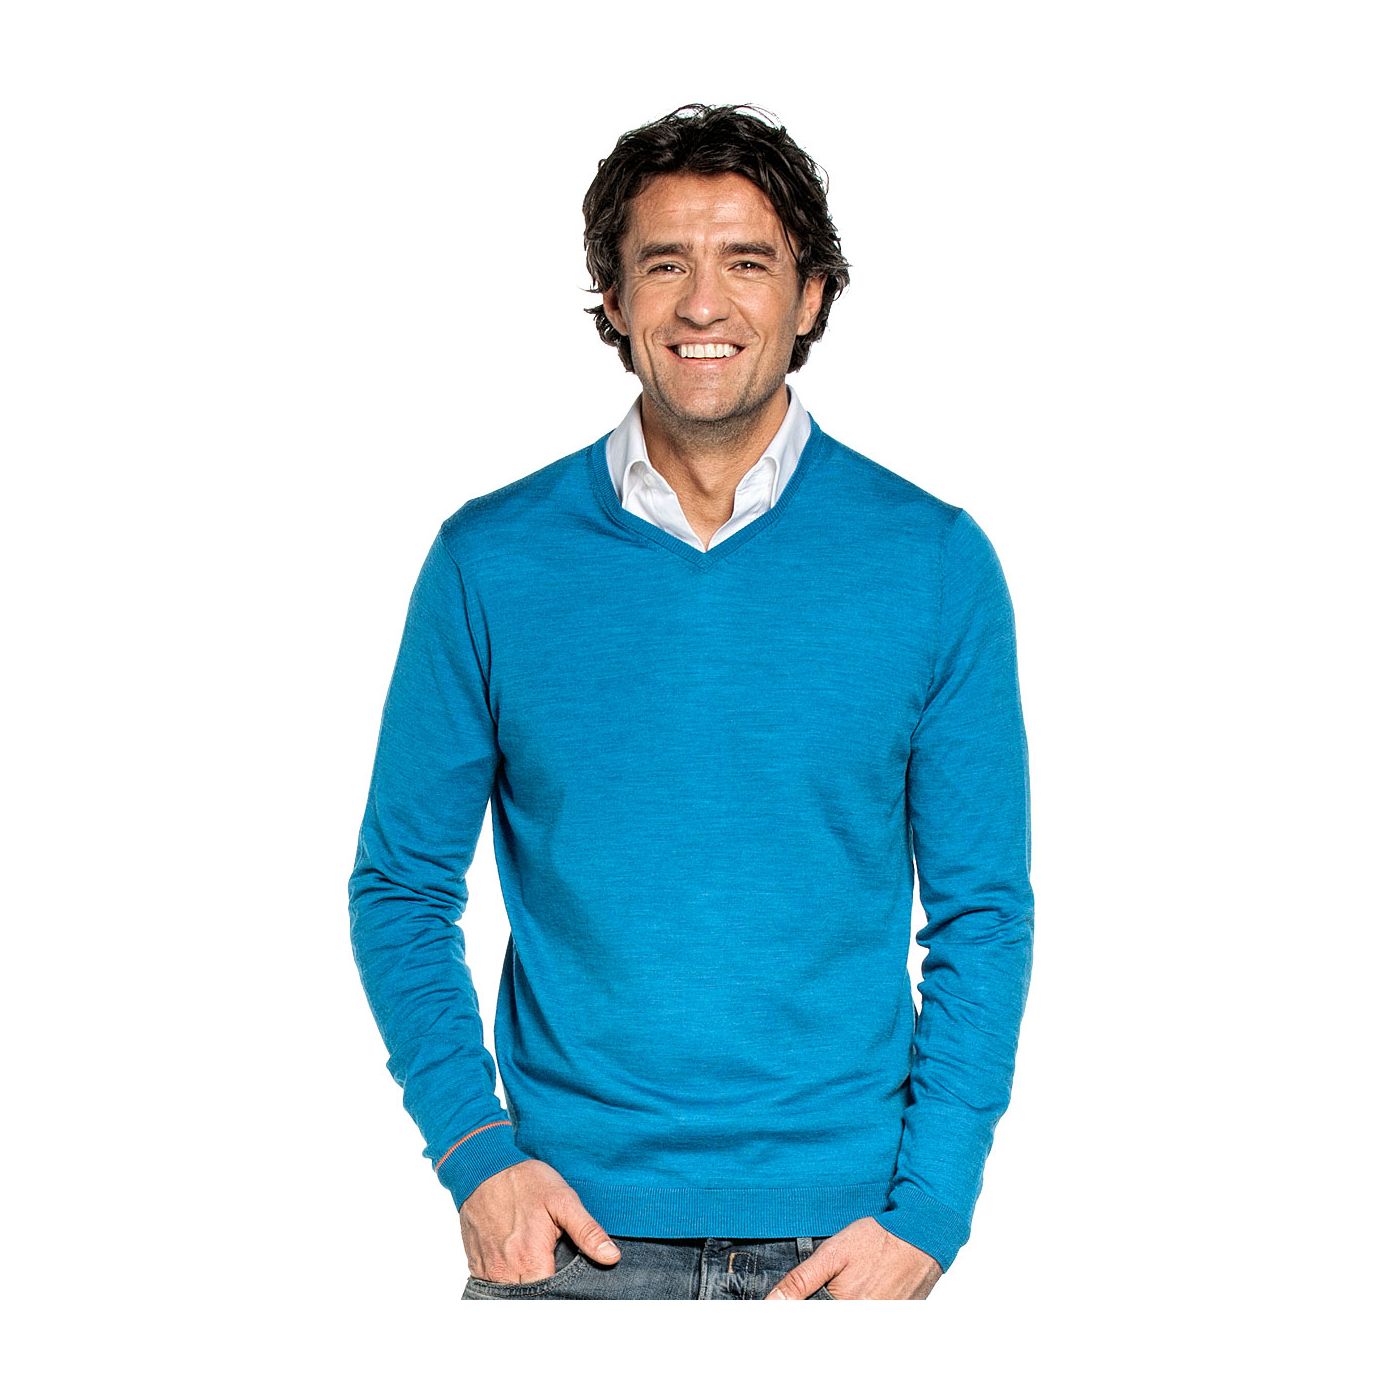 V-Neck sweater for men made of Merino wool in Bright blue